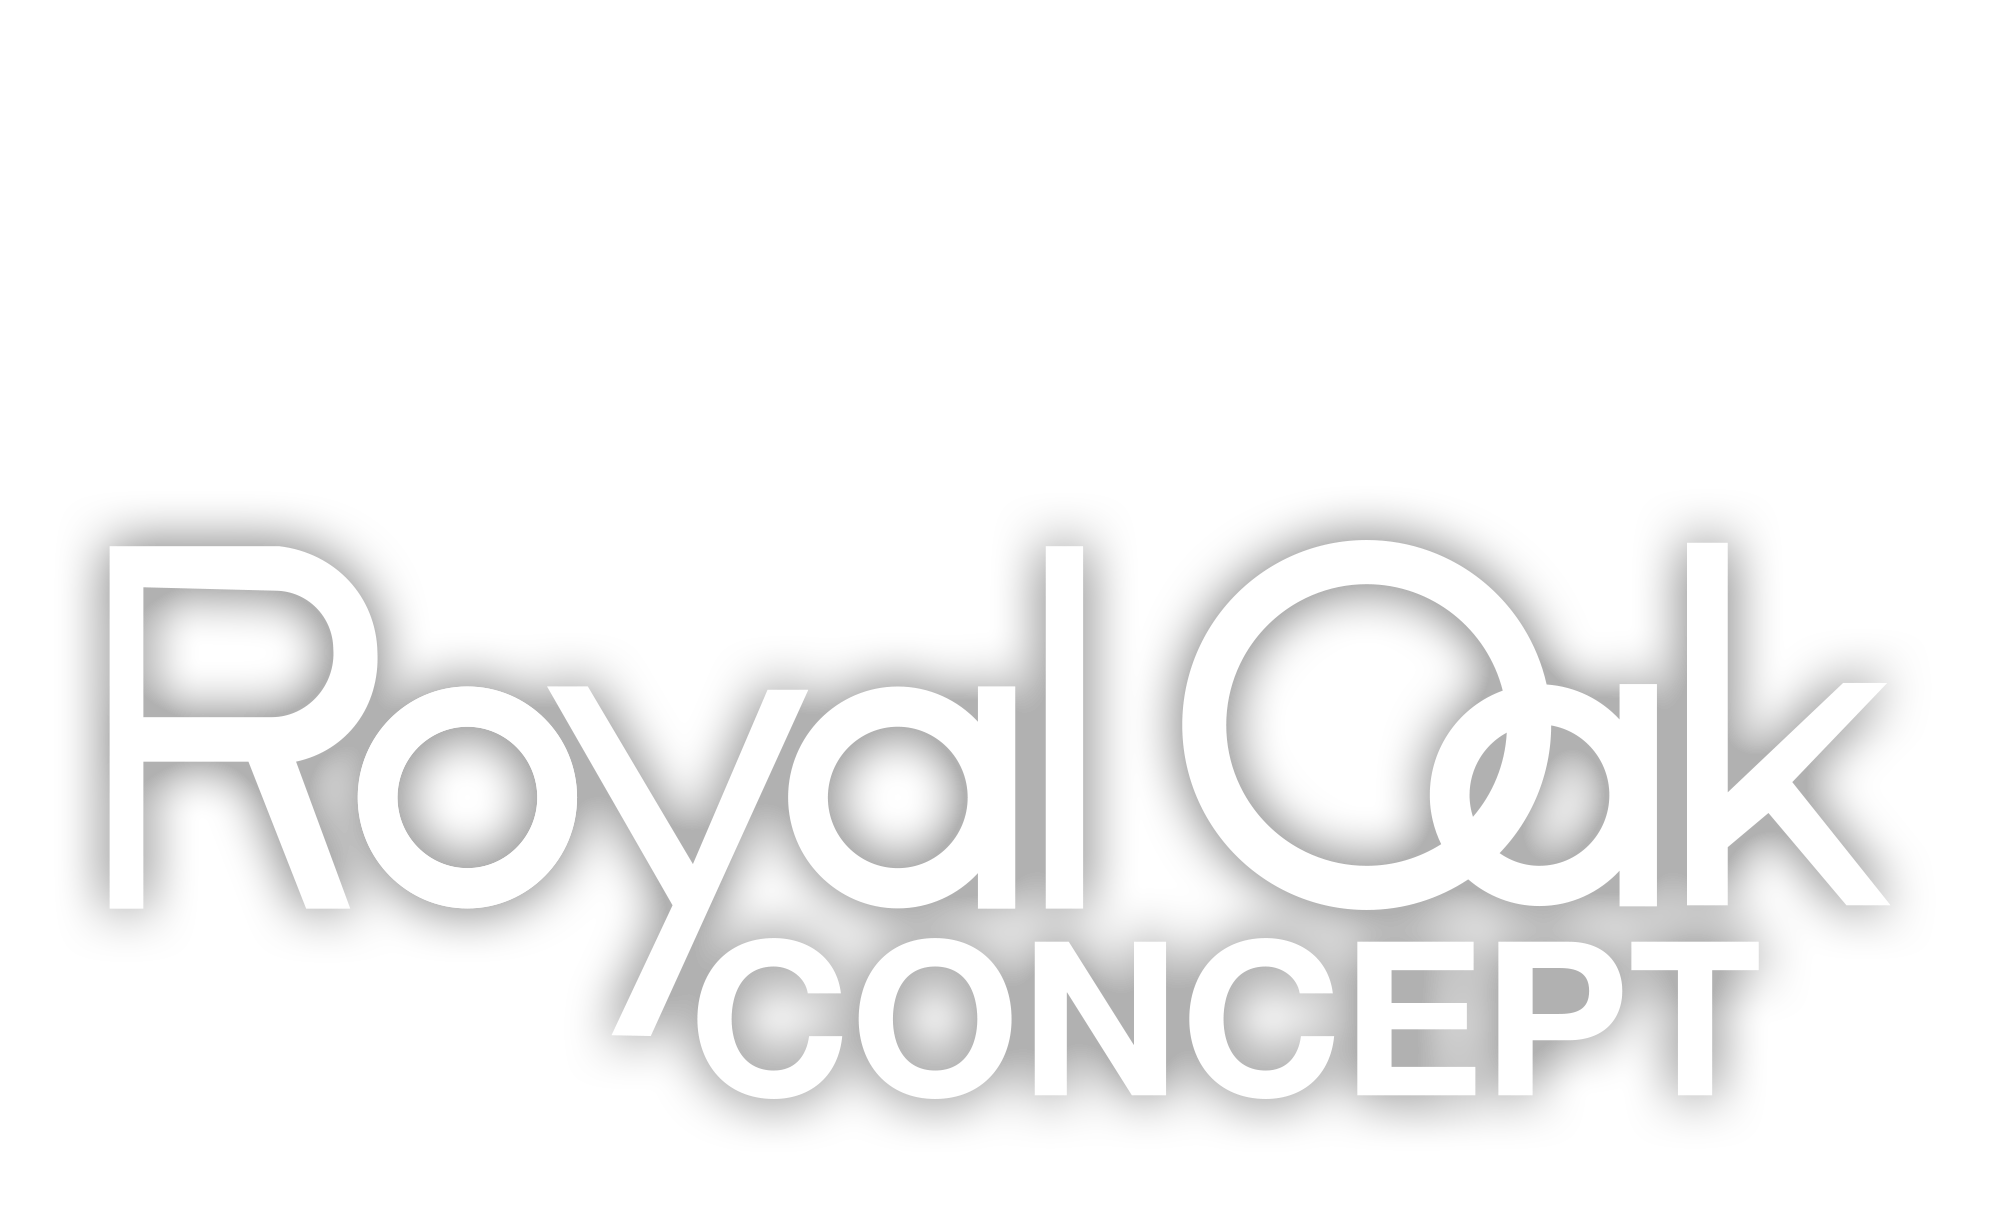 Collection Royal Oak Concept